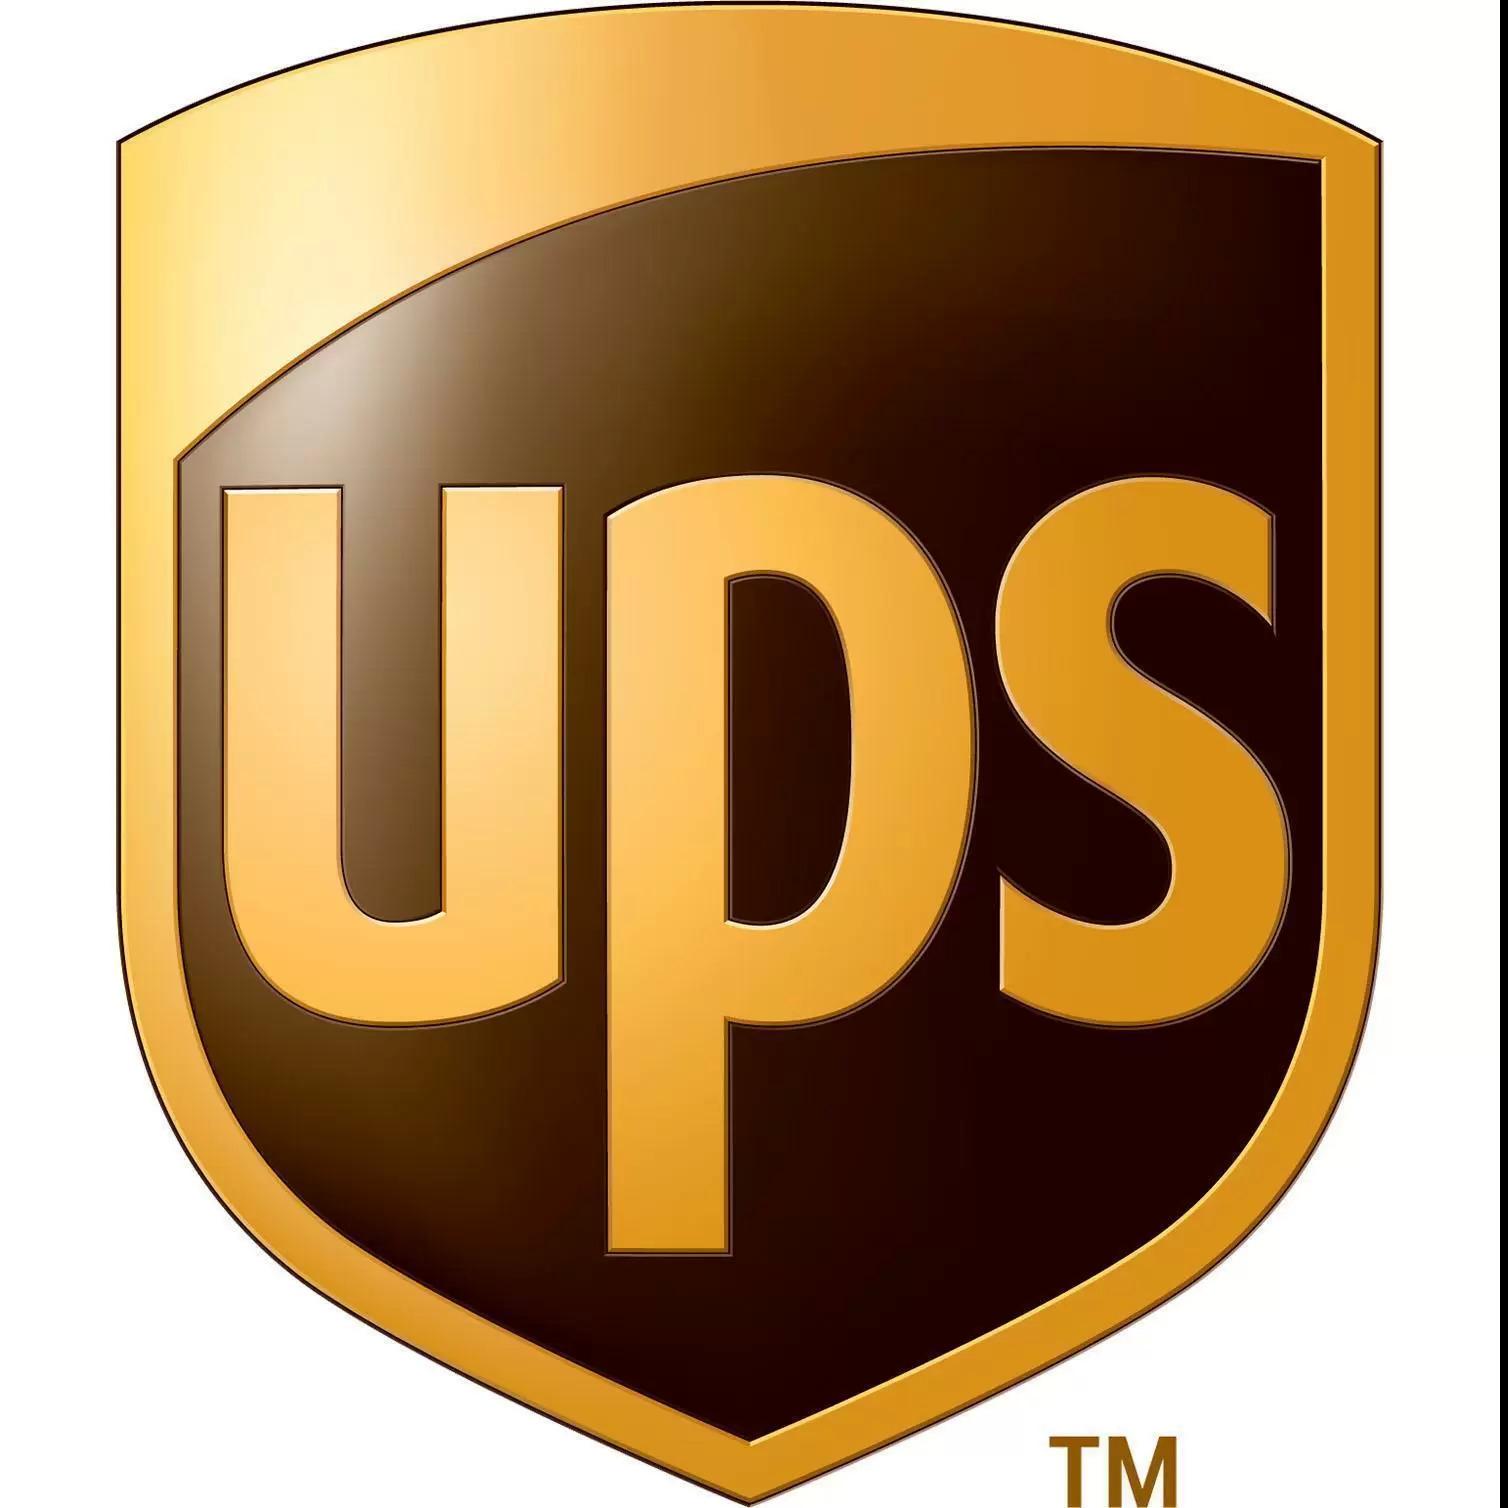 UPS My Choice Premium 2Month Membership Deals